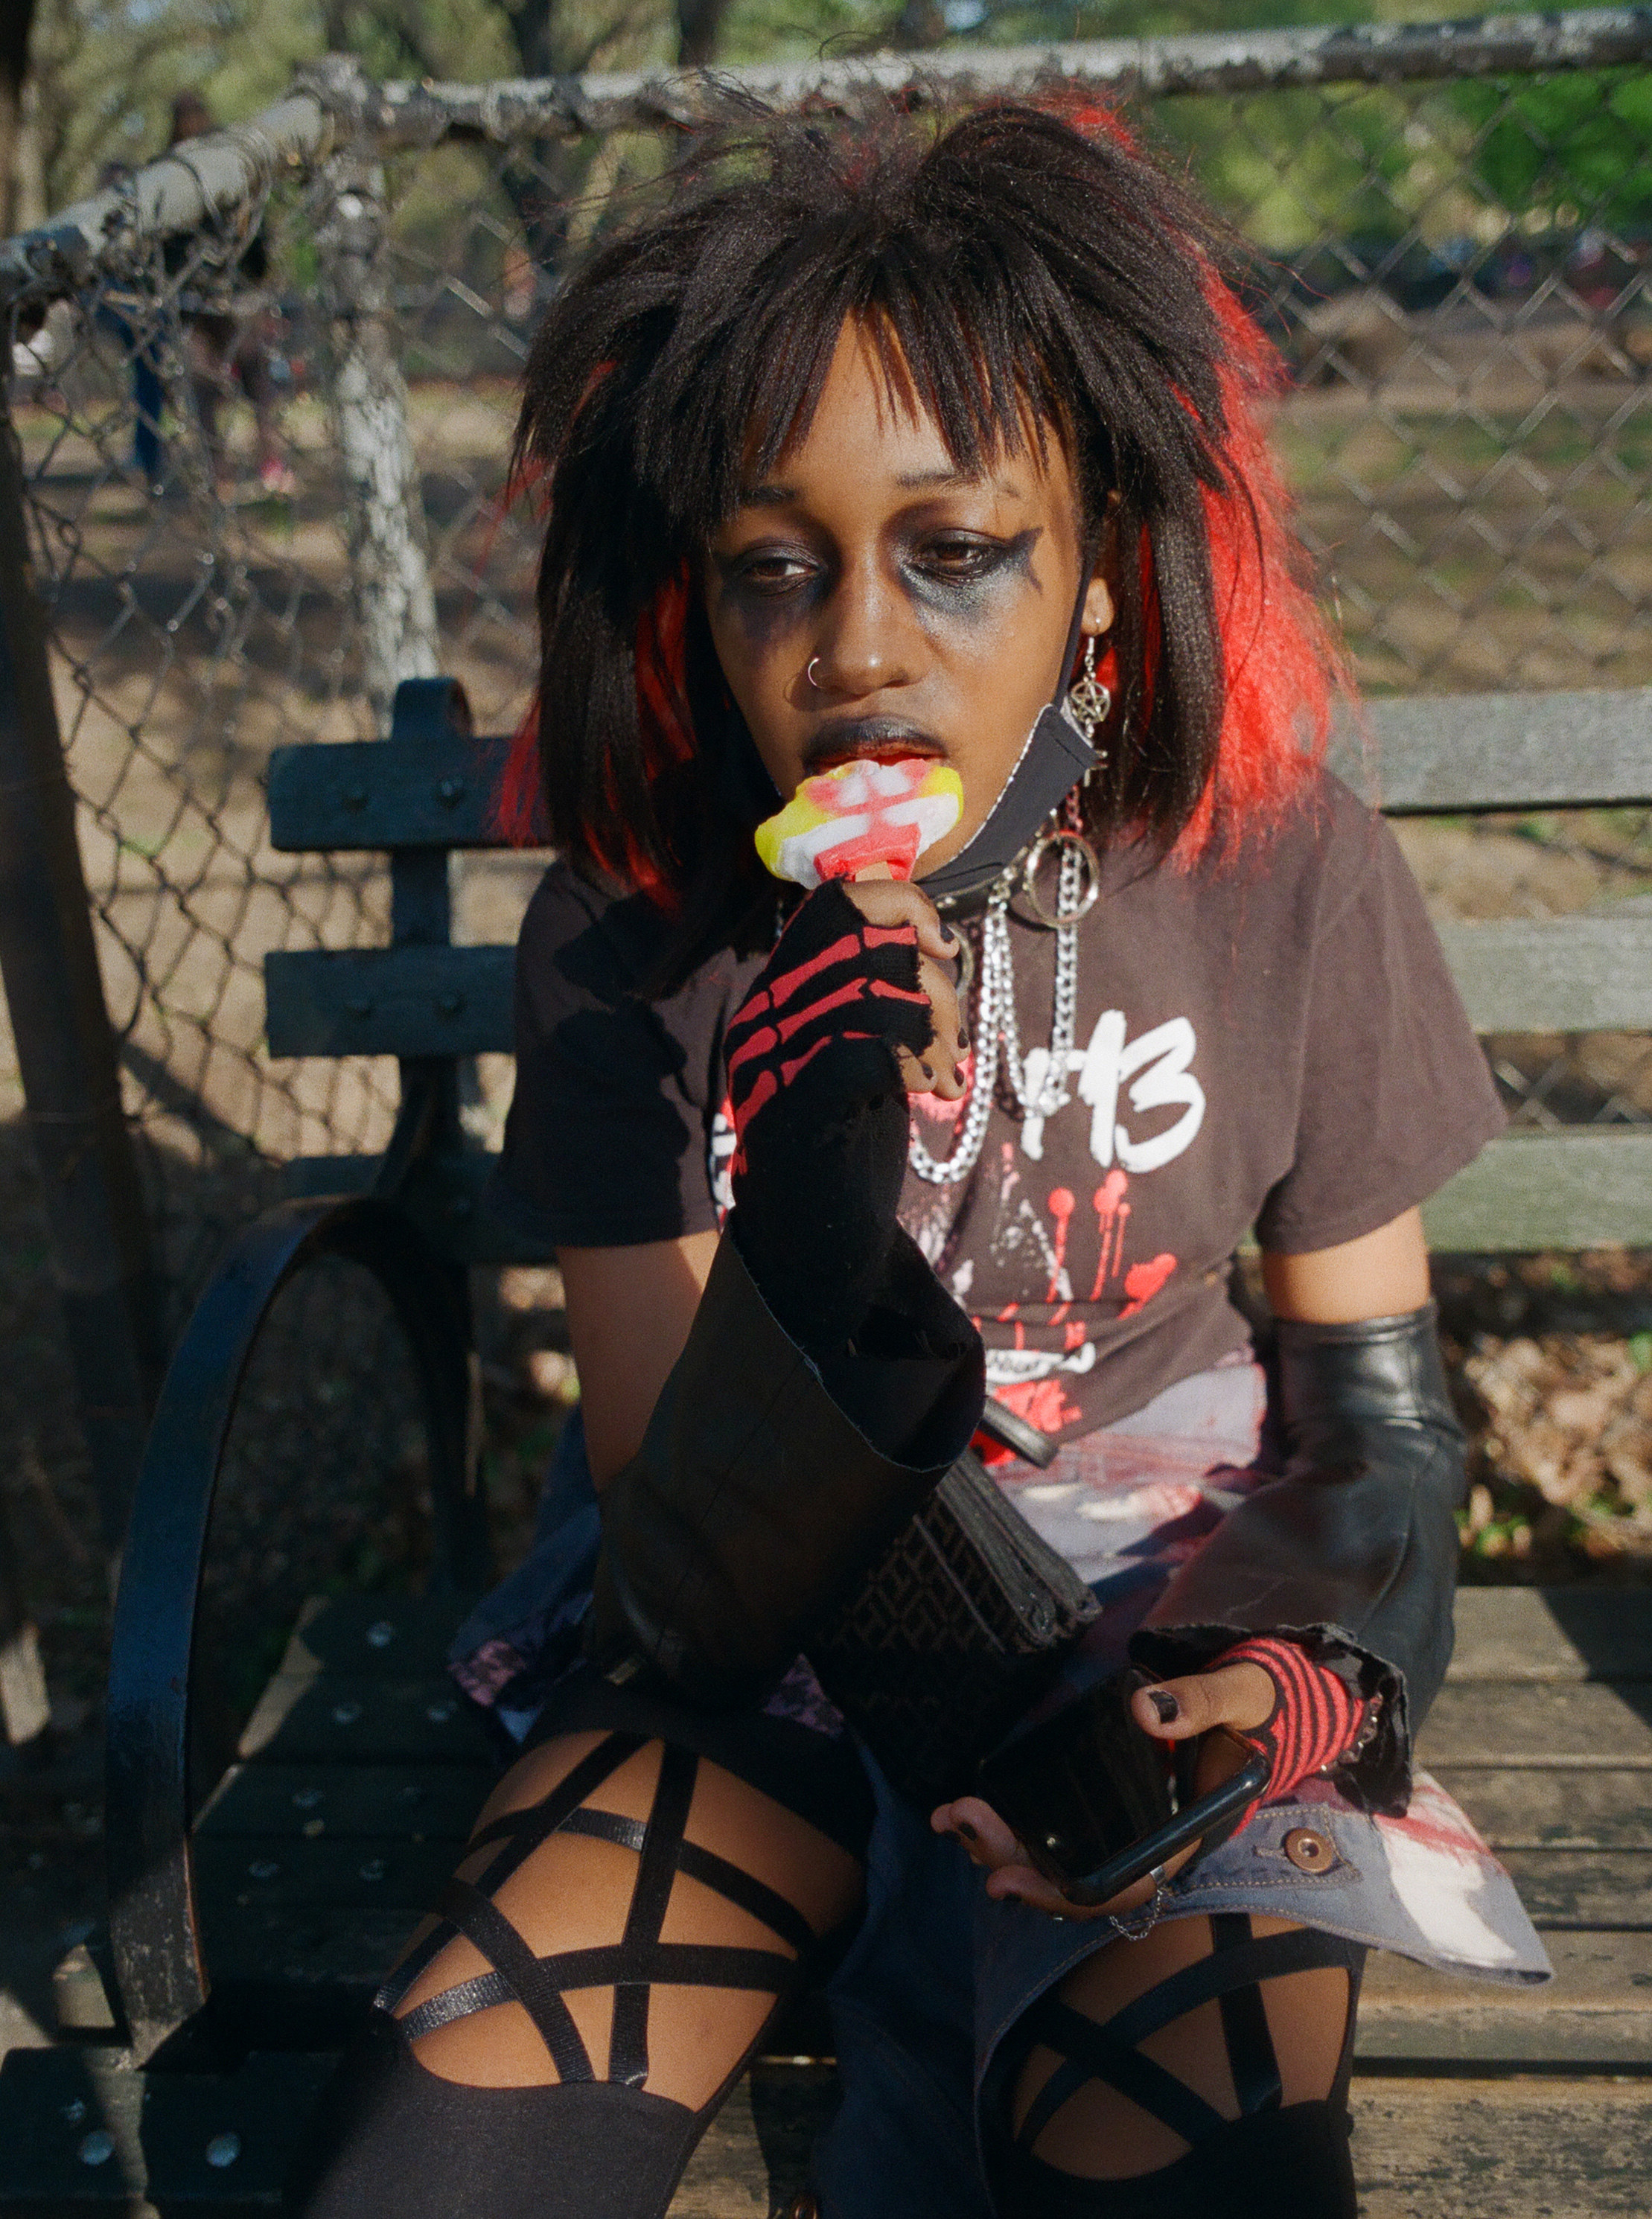 a young goth girl eats a spongebob ice cream on a park bench 